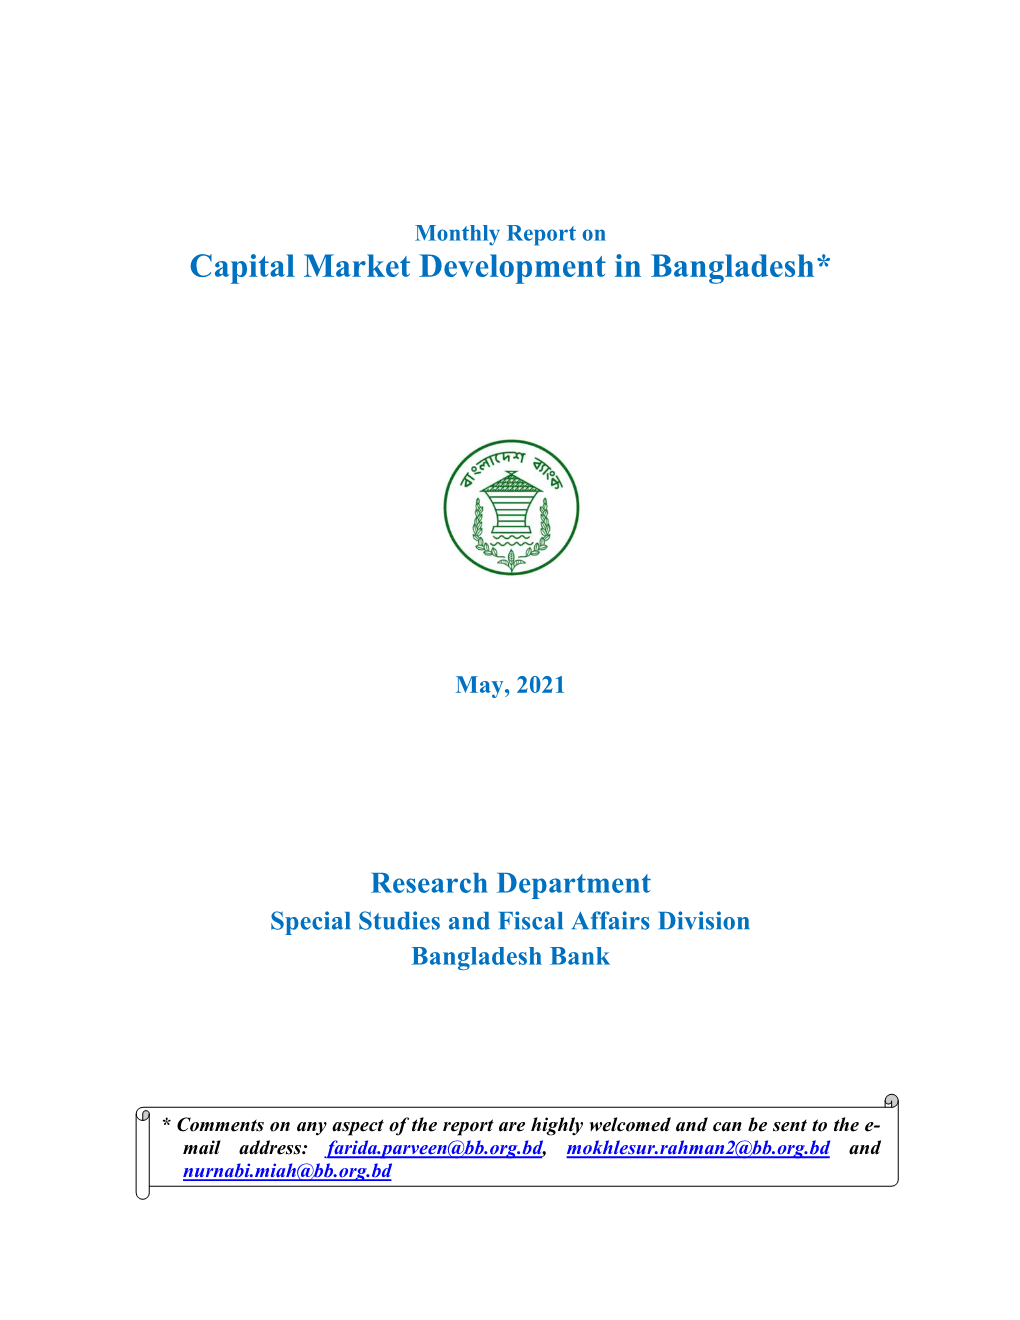 Capital Market Development in Bangladesh*